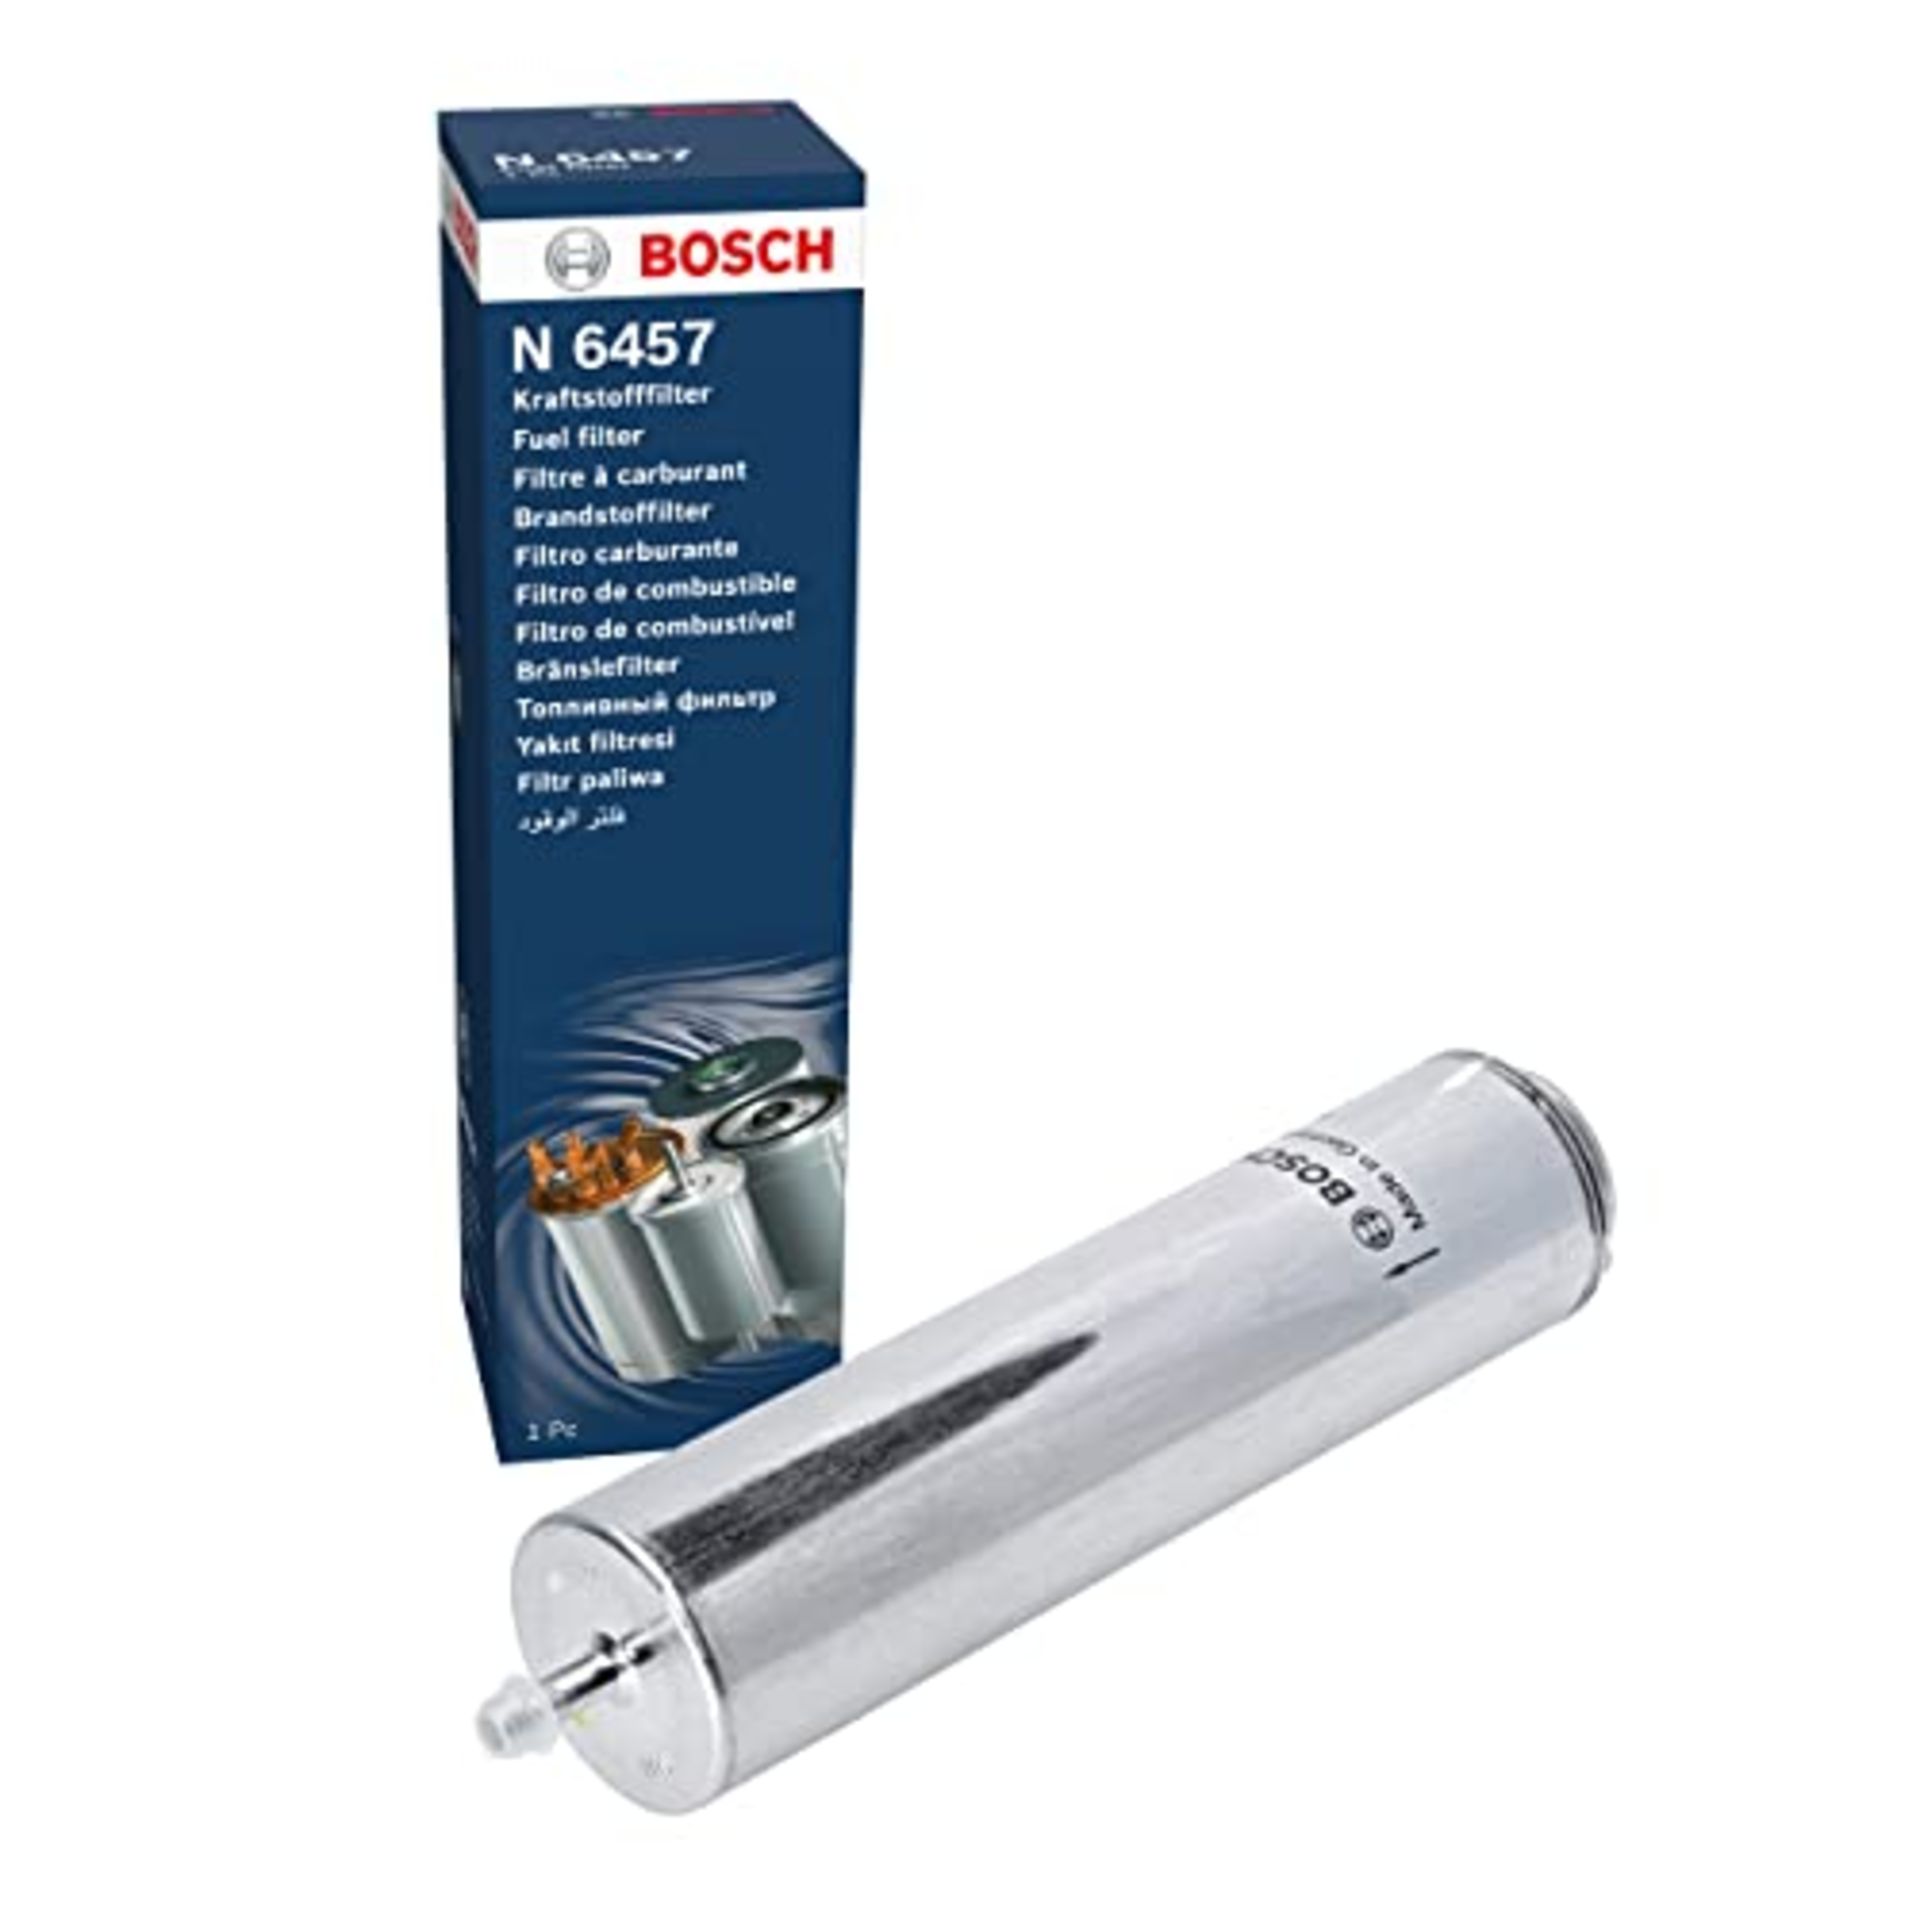 Bosch N6457 - Diesel Filter for Cars